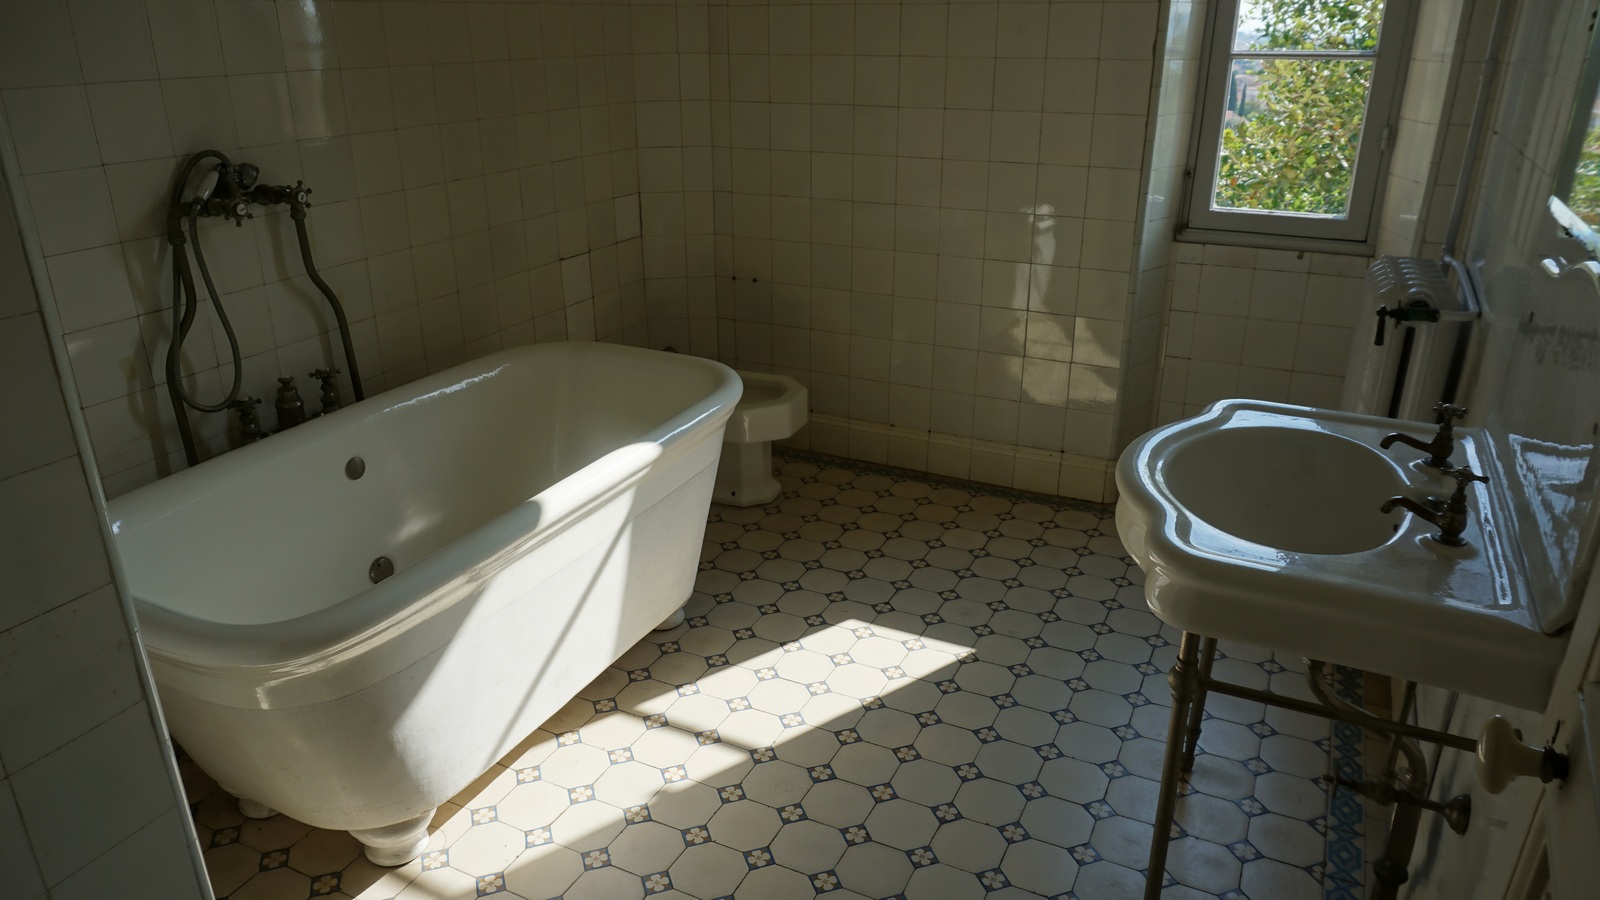 Bathroom in the Renoir museum Cagnes-sur-Mer